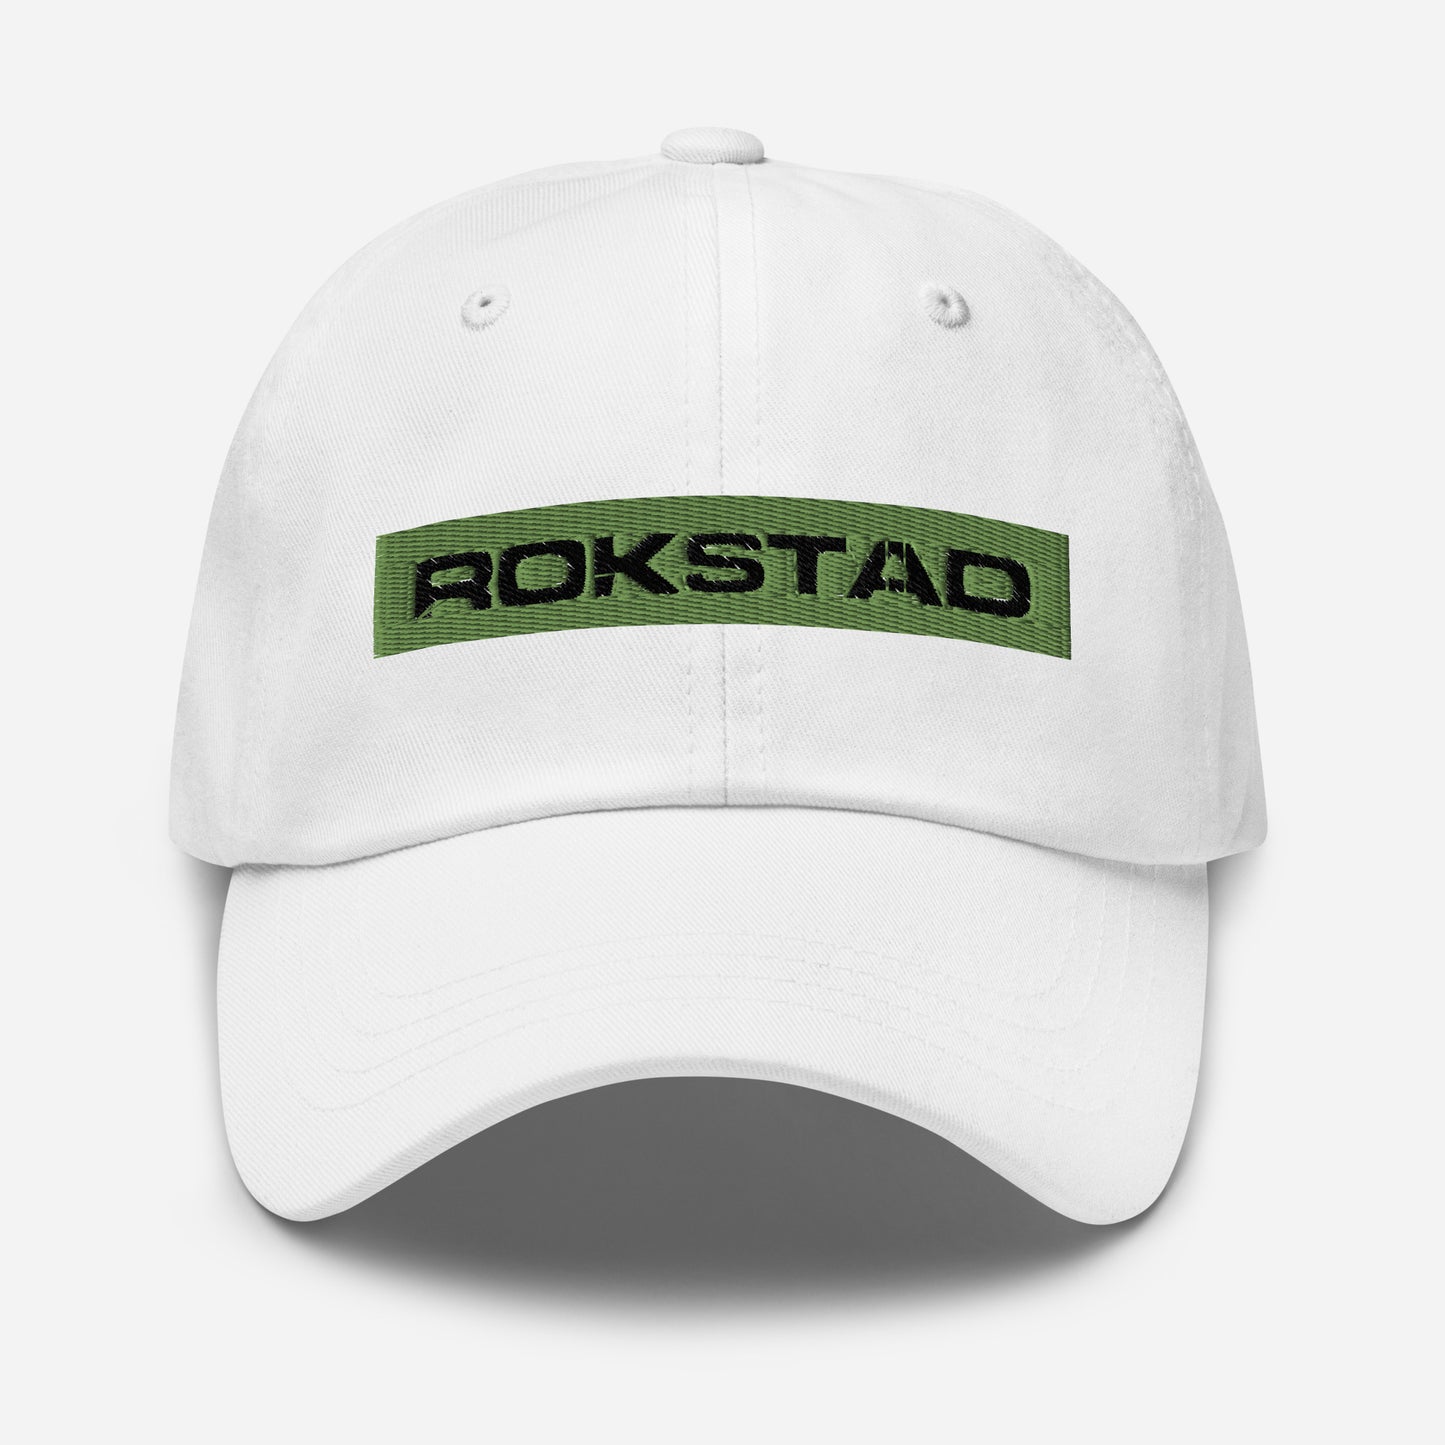 Rokstad - Embroidered Baseball Cap